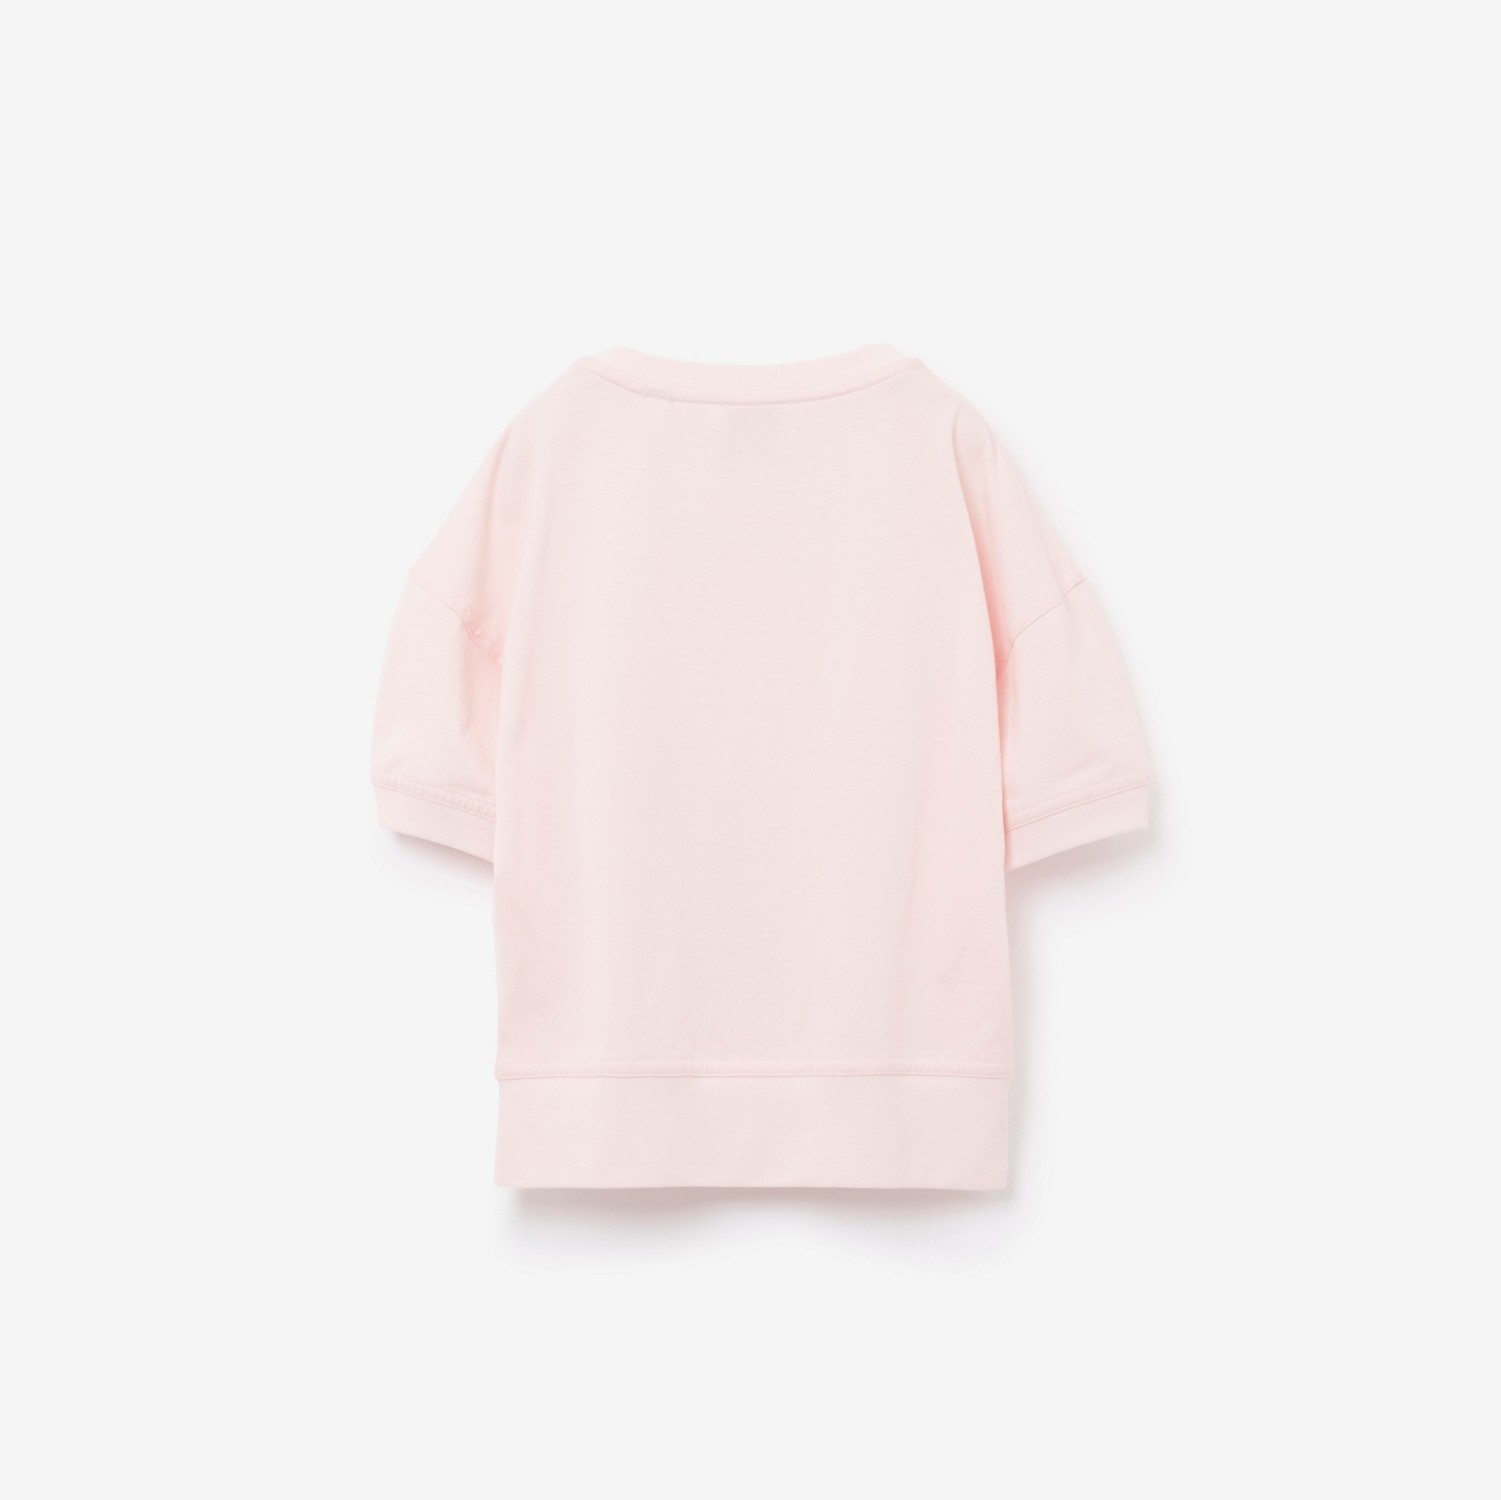 Camiseta en algodón con osito Thomas (Rosa Alabastro) | Burberry® oficial